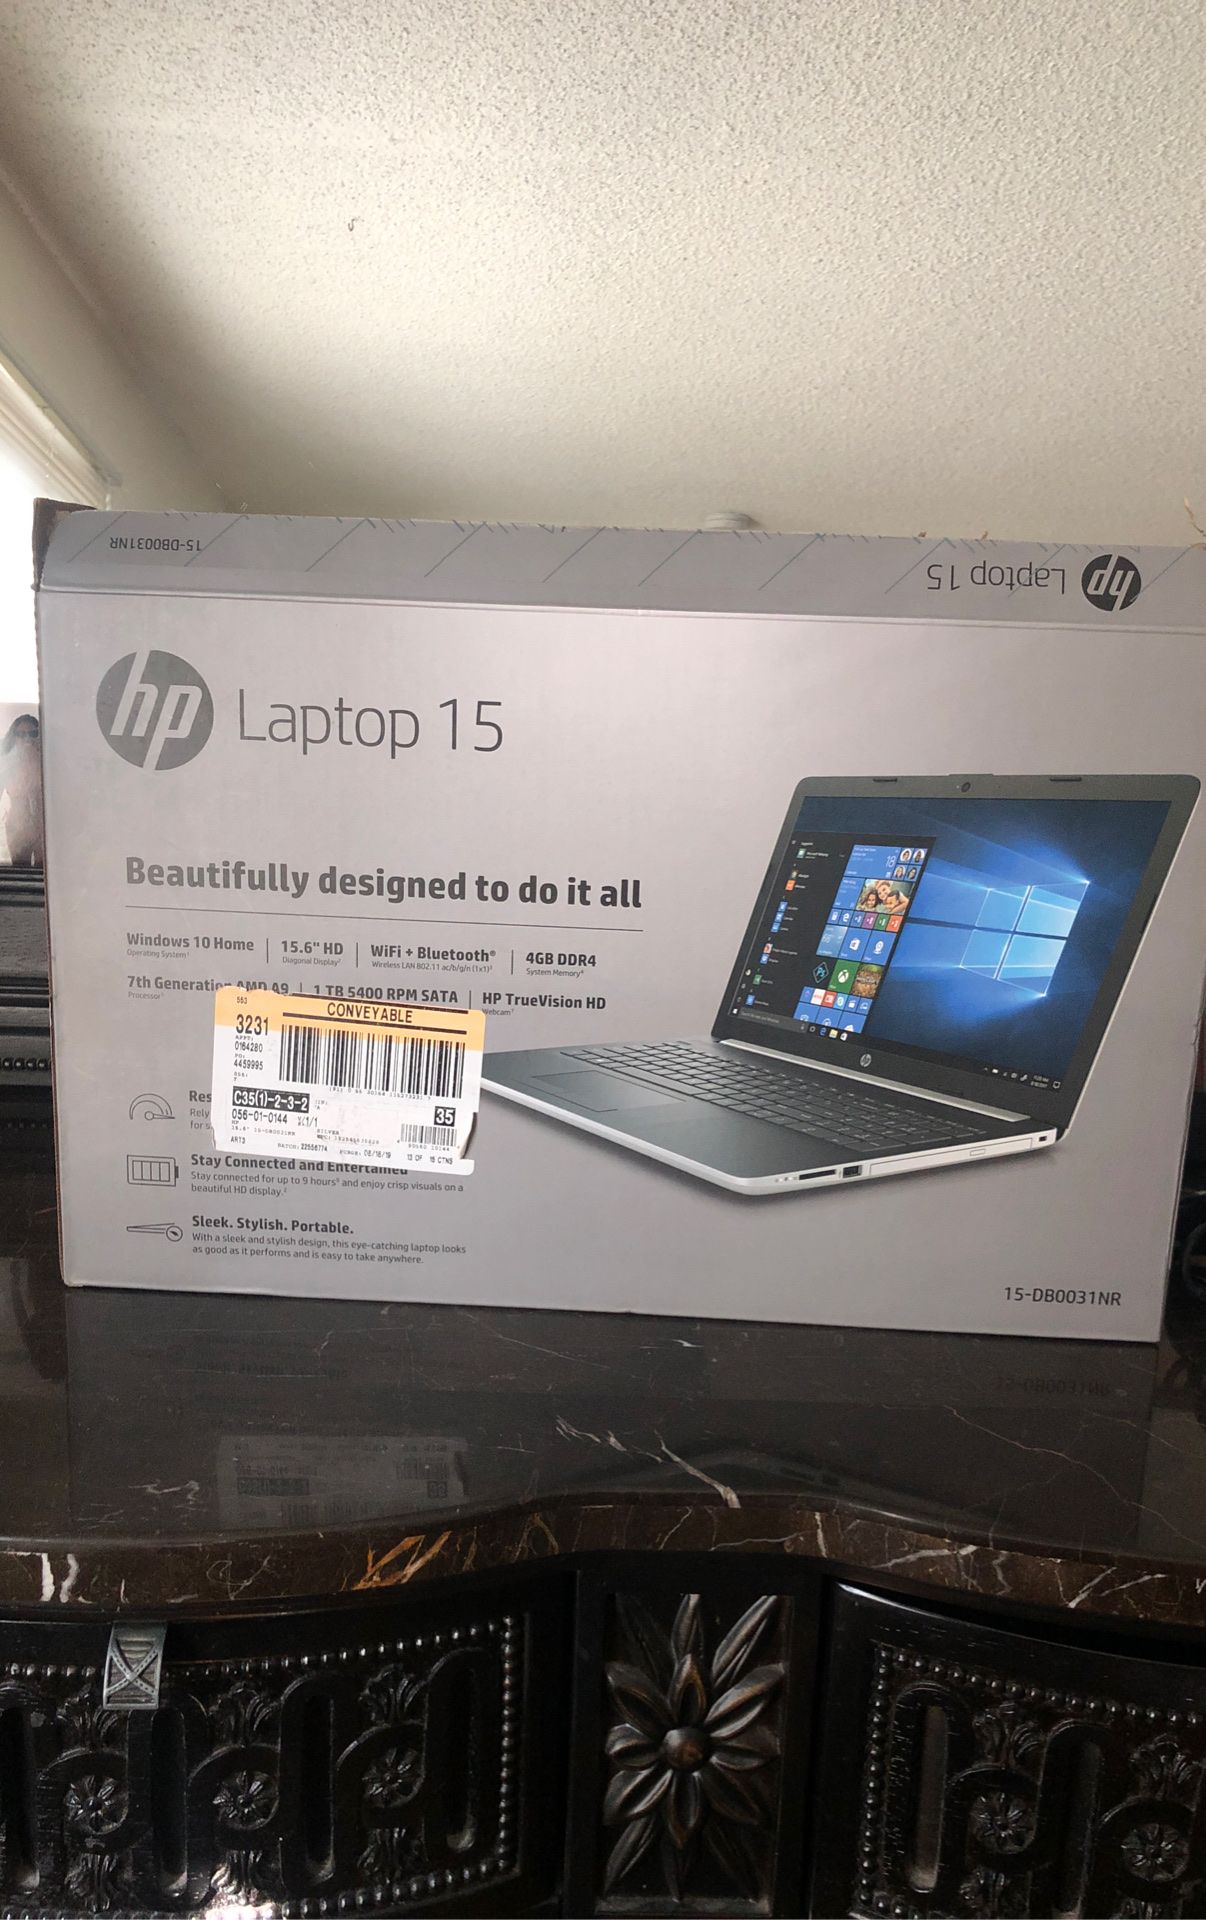 HP Laptop 15 “open box”